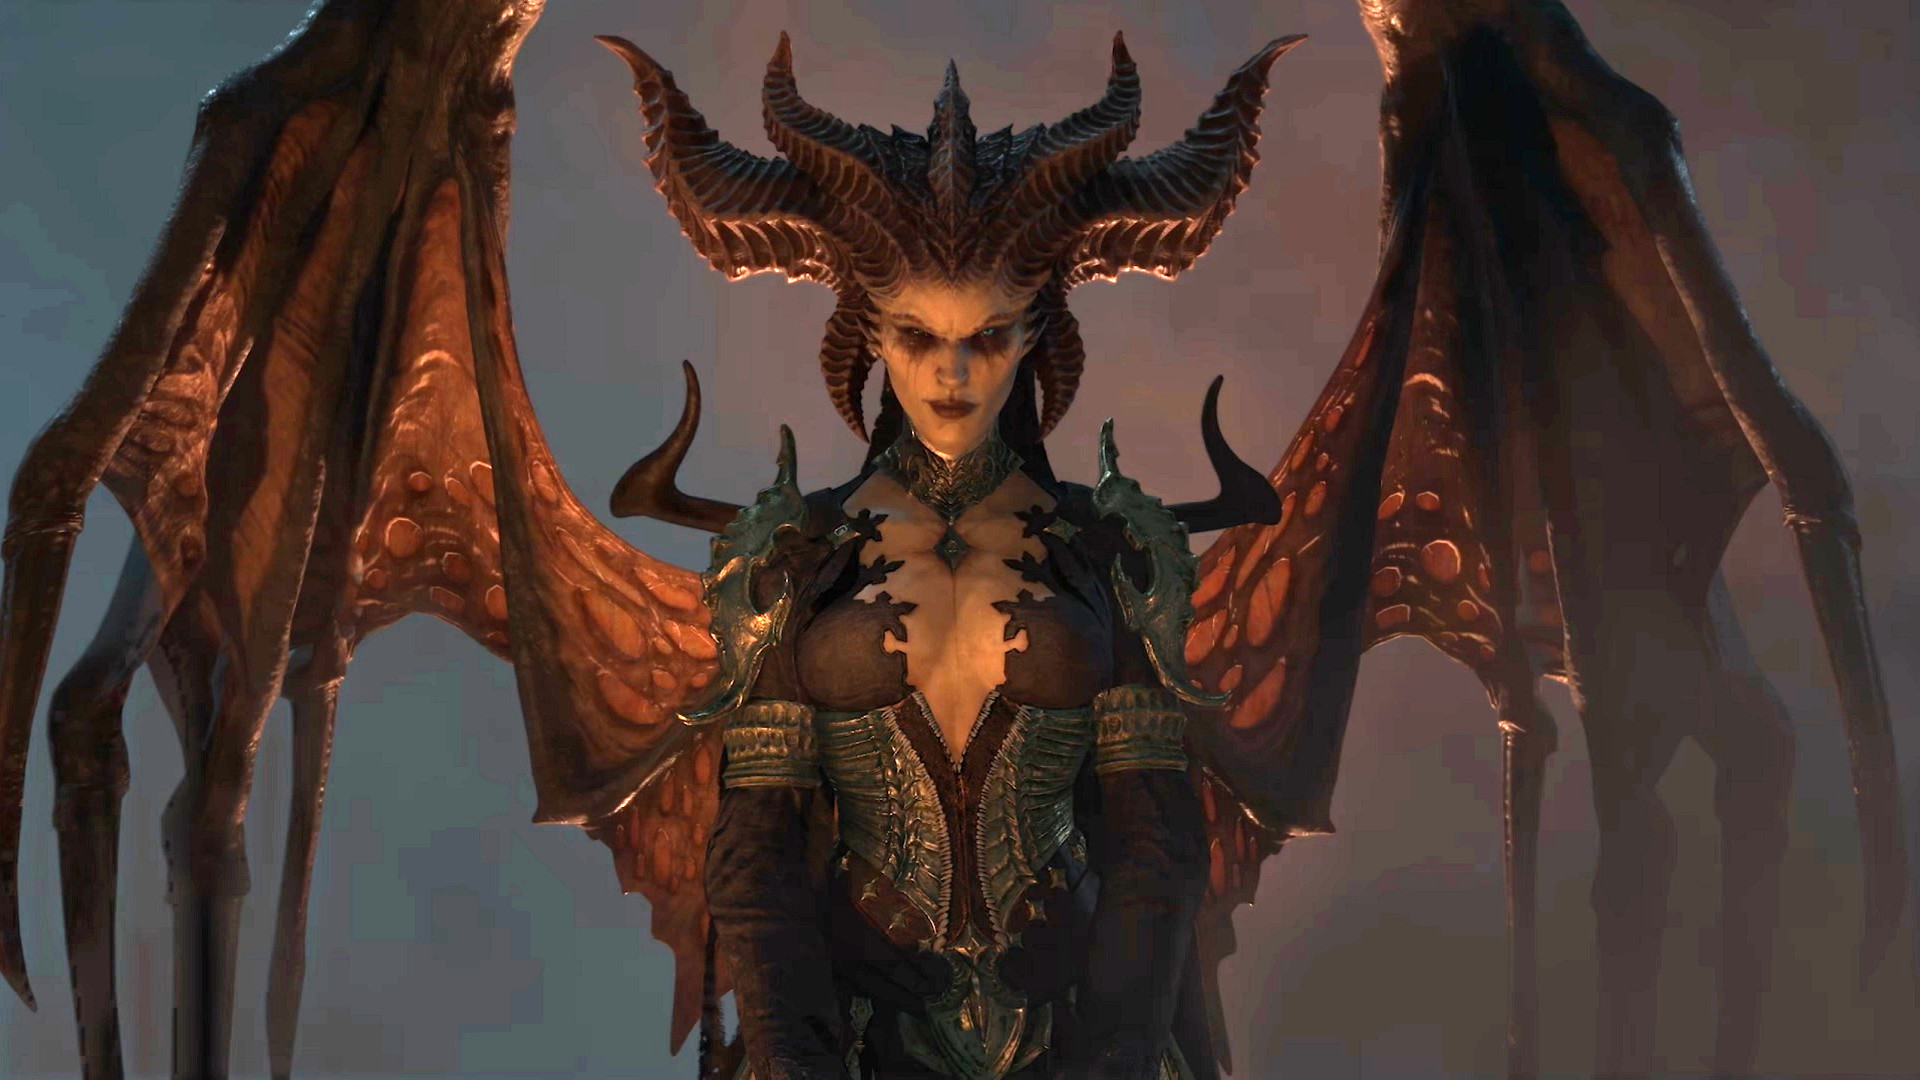 Diablo 4 Season 2: Endgame Abattoir Of Zir Is Coming! - Basic Info & Prep  Guide